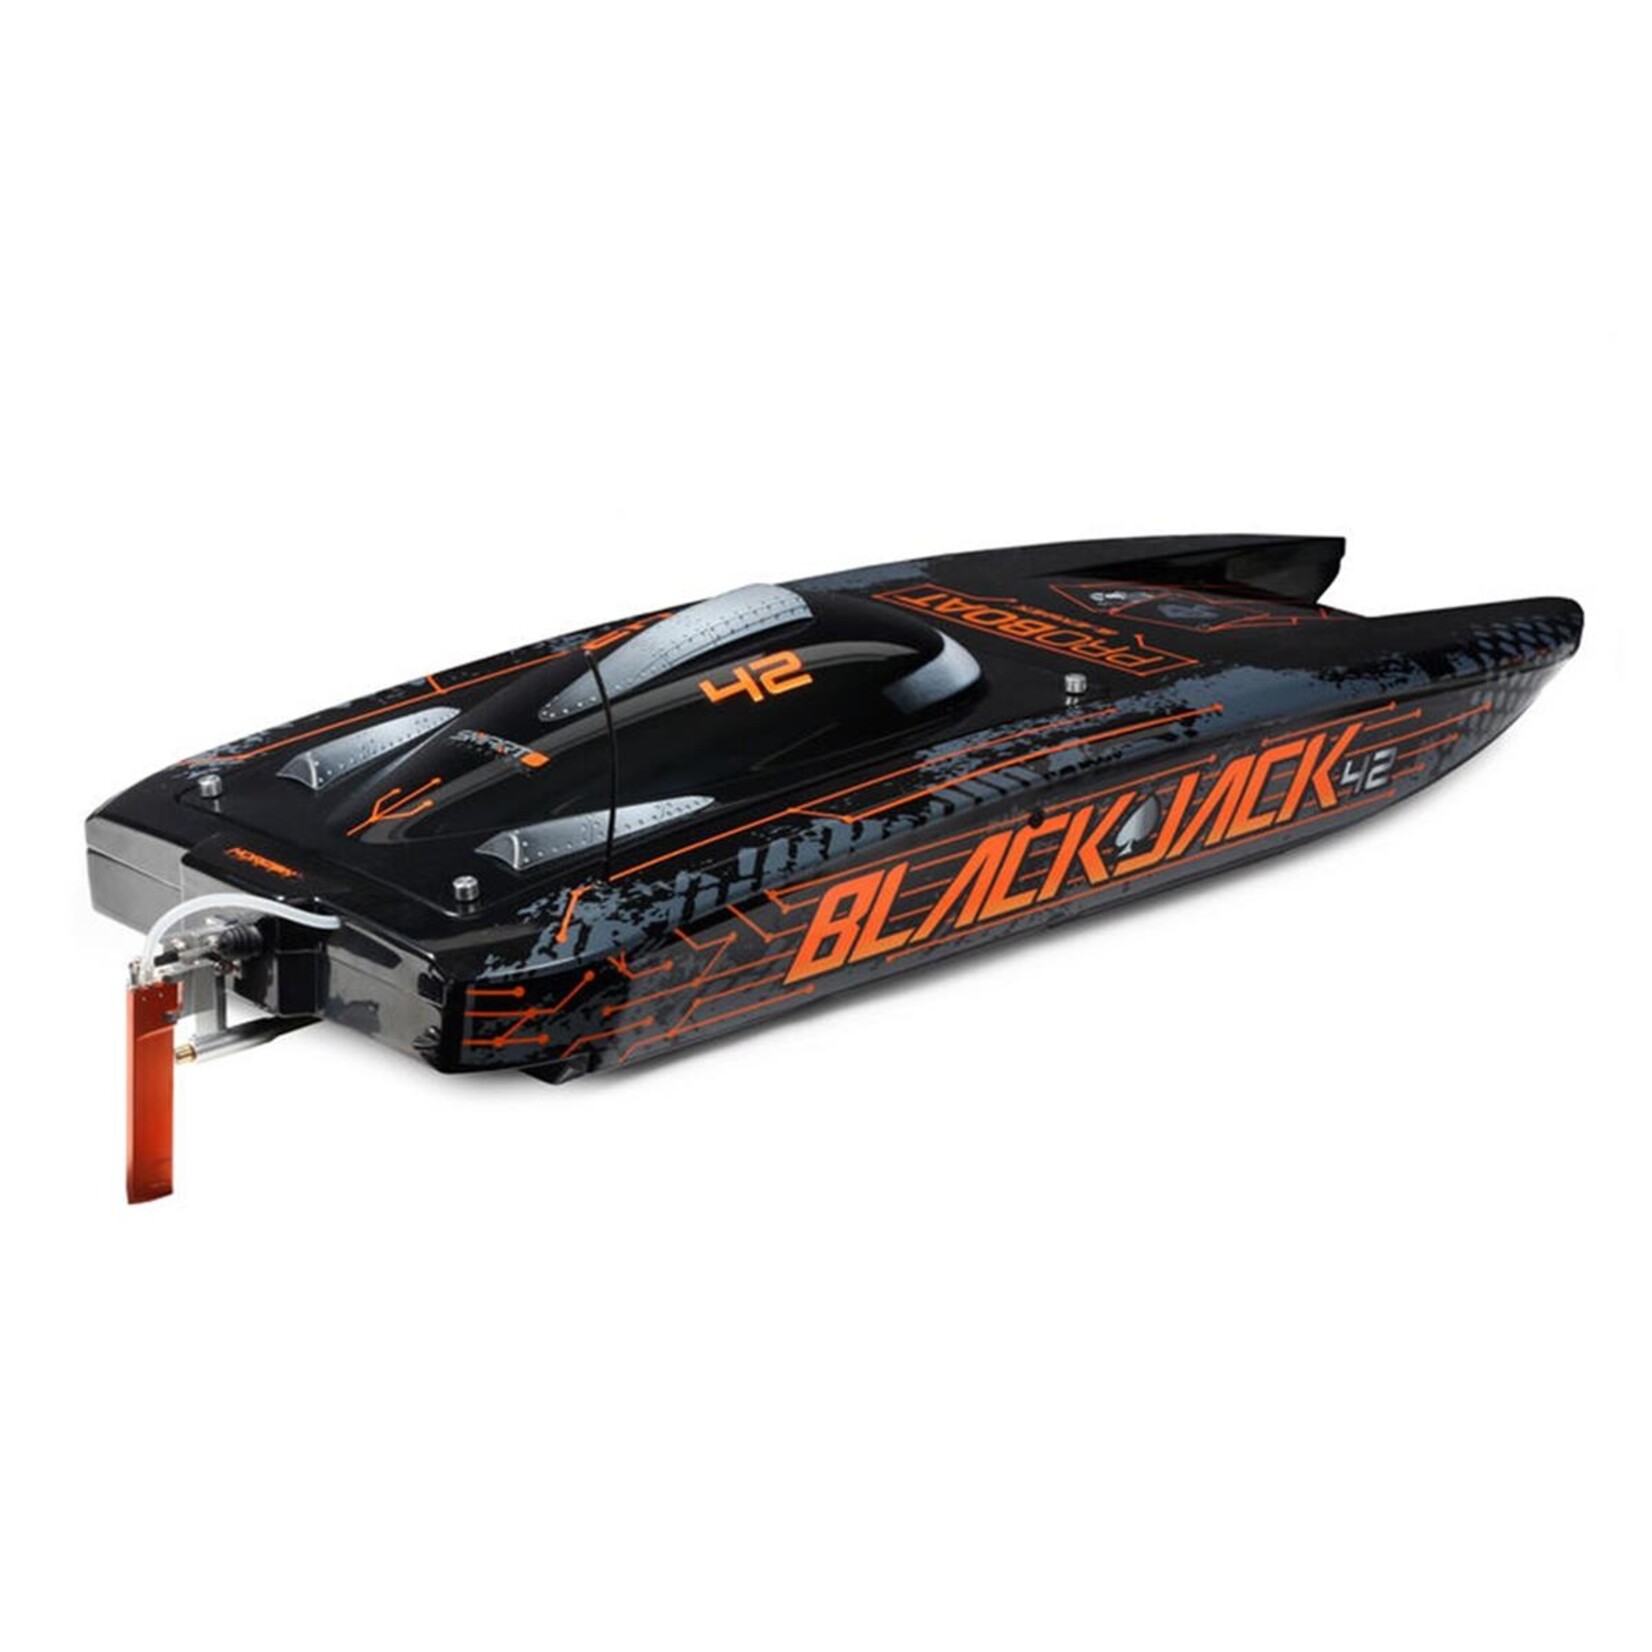 Pro Boat Pro Boat Blackjack 42" 8S Brushless RTR Electric Catamaran (Black/Orange) w/2.4GHz Radio System #PRB08043T1